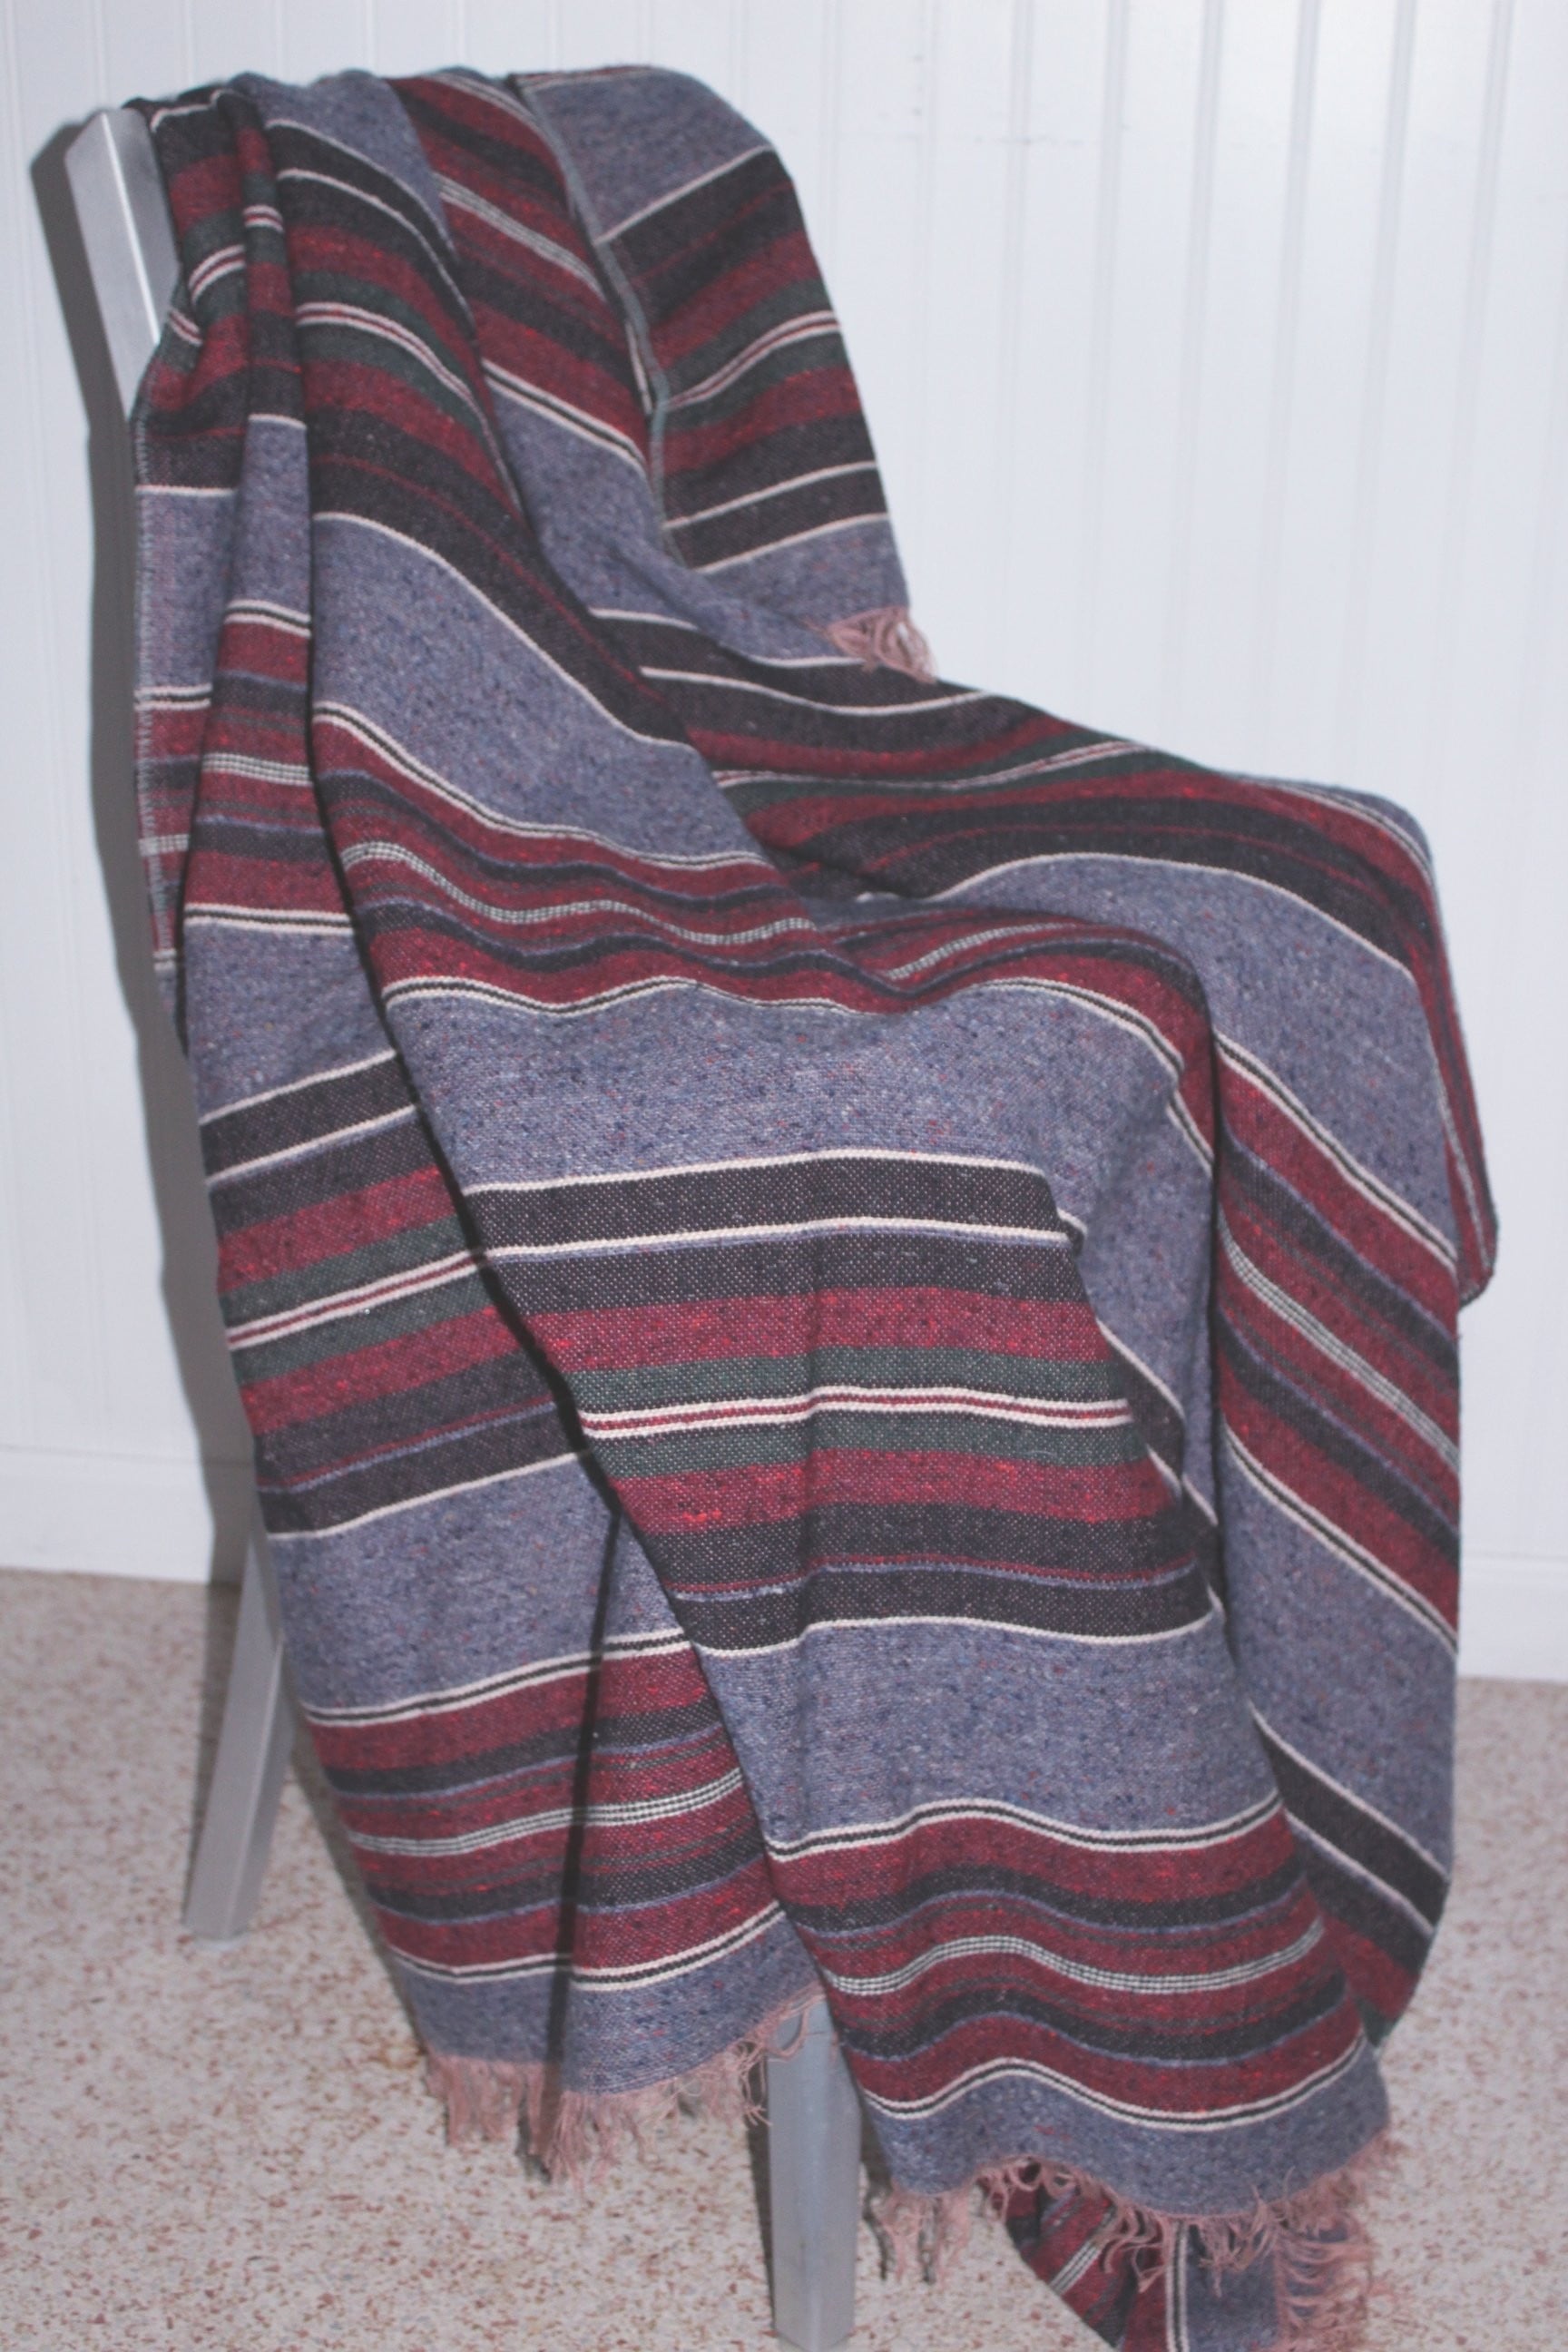 Fringed Blanket Travel Rug Loomed Dense Blues Purples Stripe 80" X 58" Decor OOAK bed cover